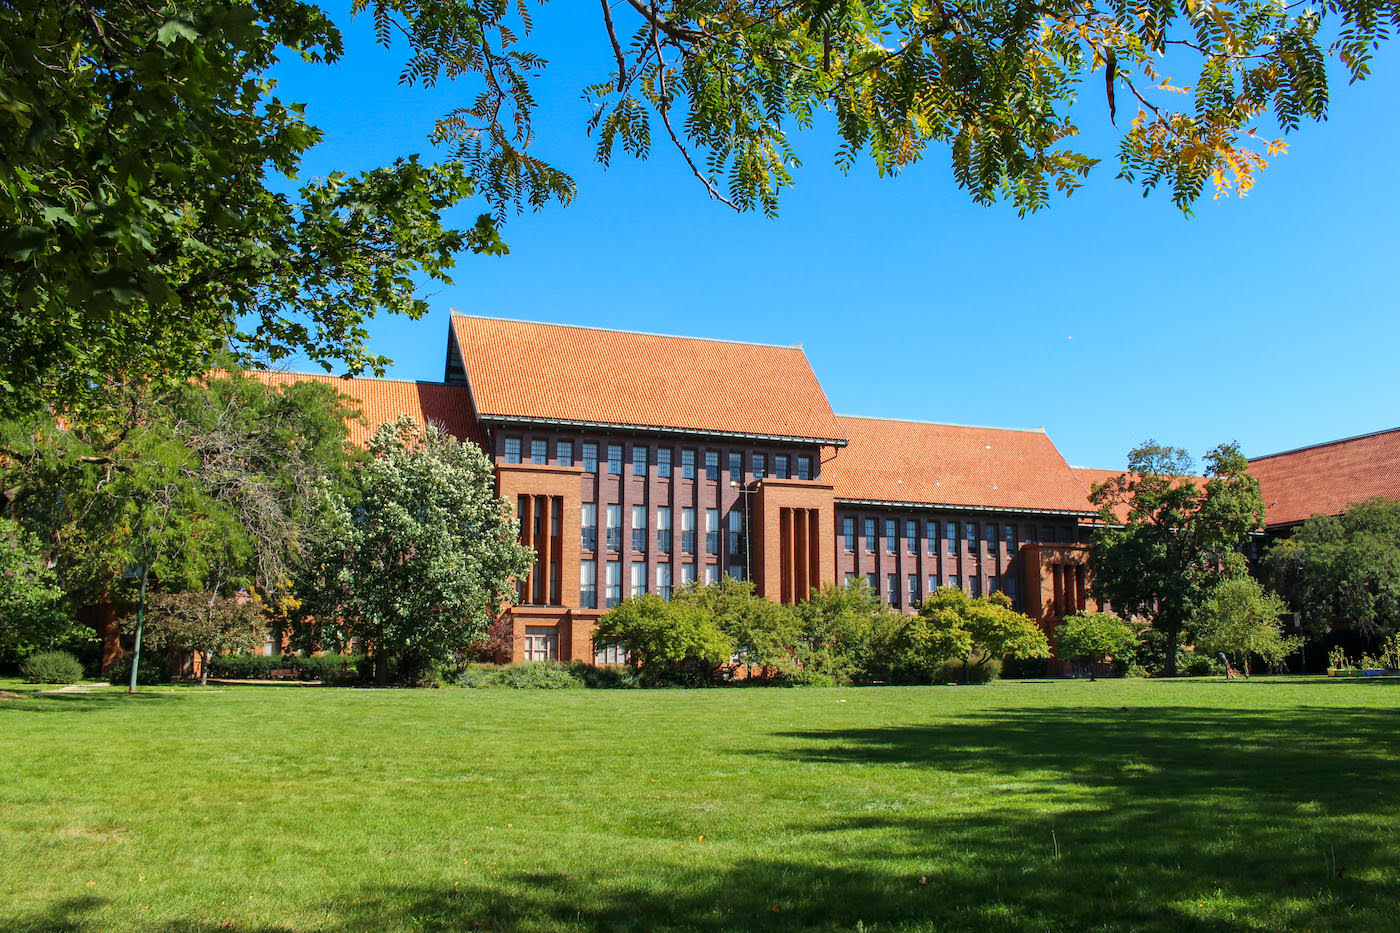 The orange-roofed Schurz high school seen across a lawn against a blue sky